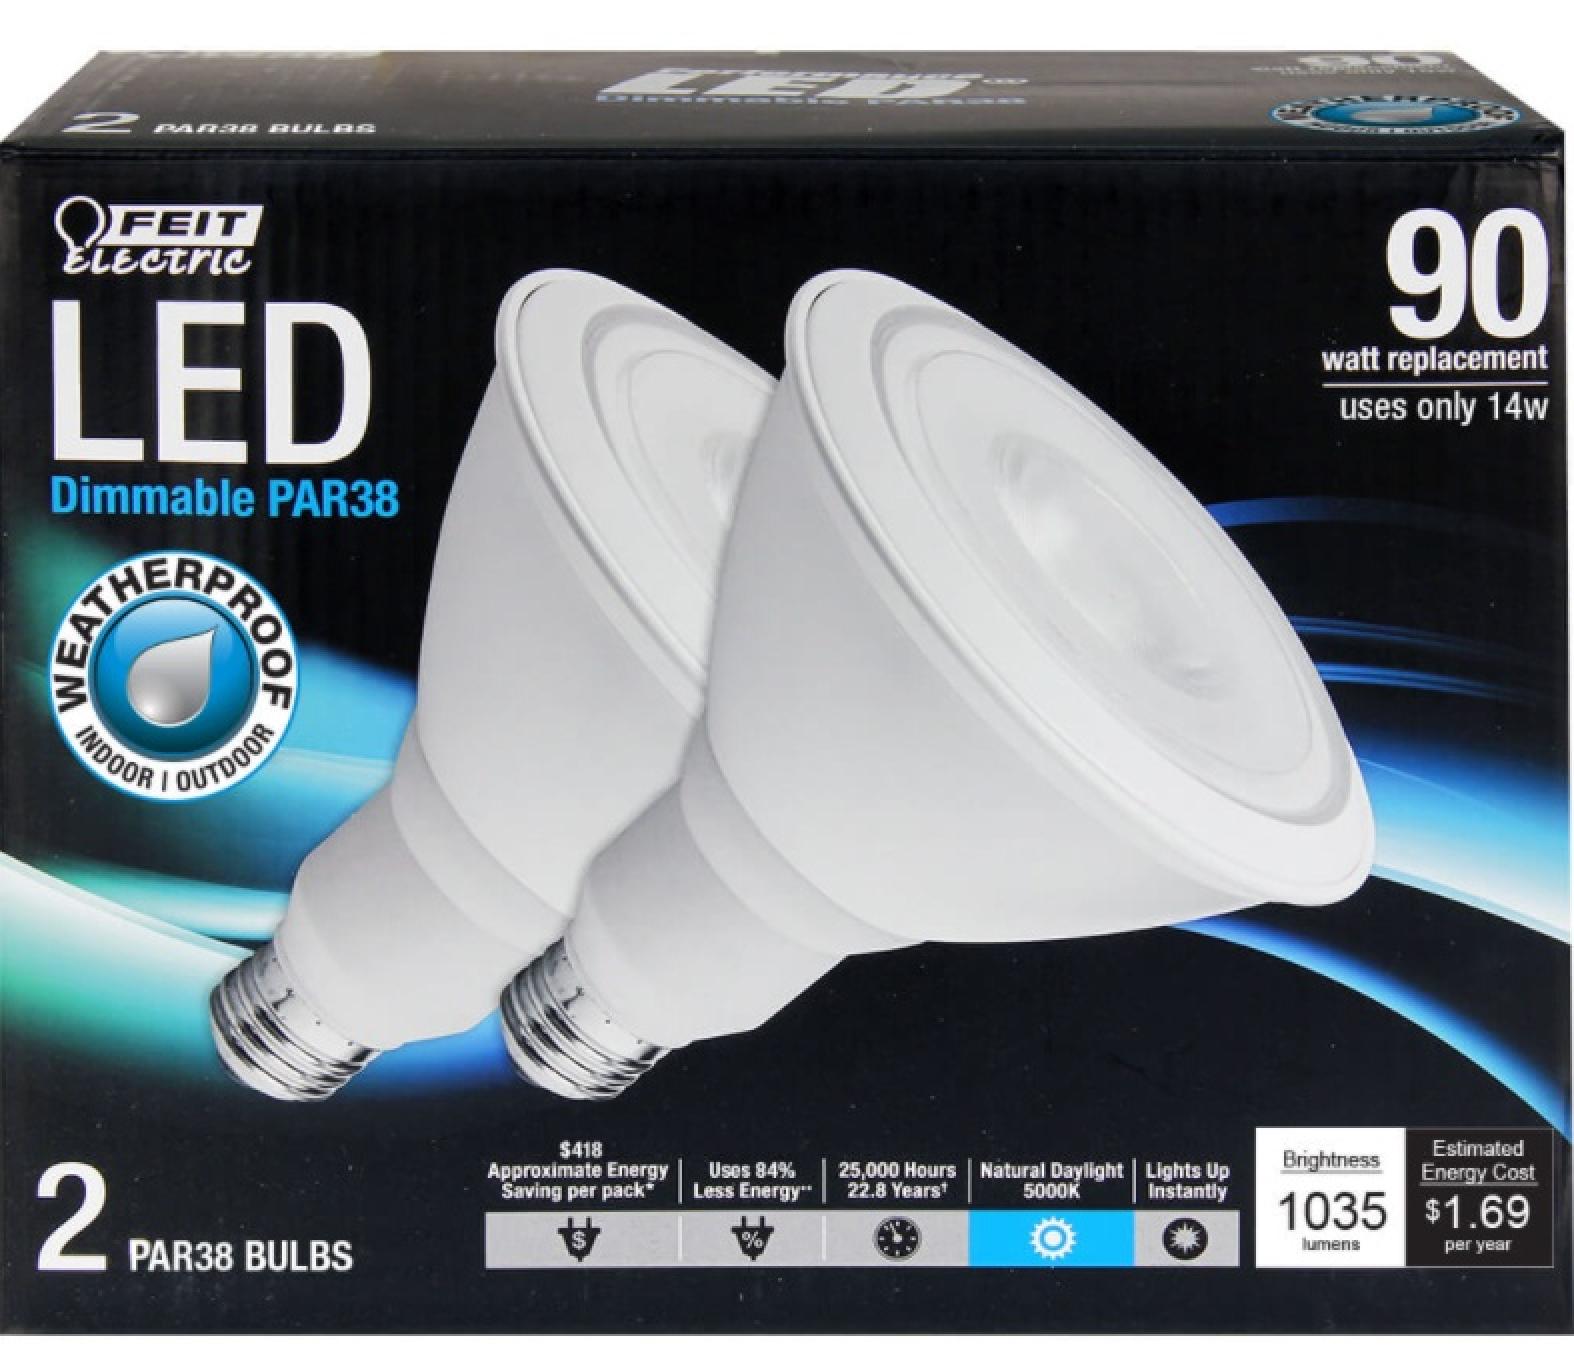 Feit Electric LED 90 Watt Equivalent 1035 Lumen Weatherproof PAR38 Dimmable Light Bulb (2 Pack)